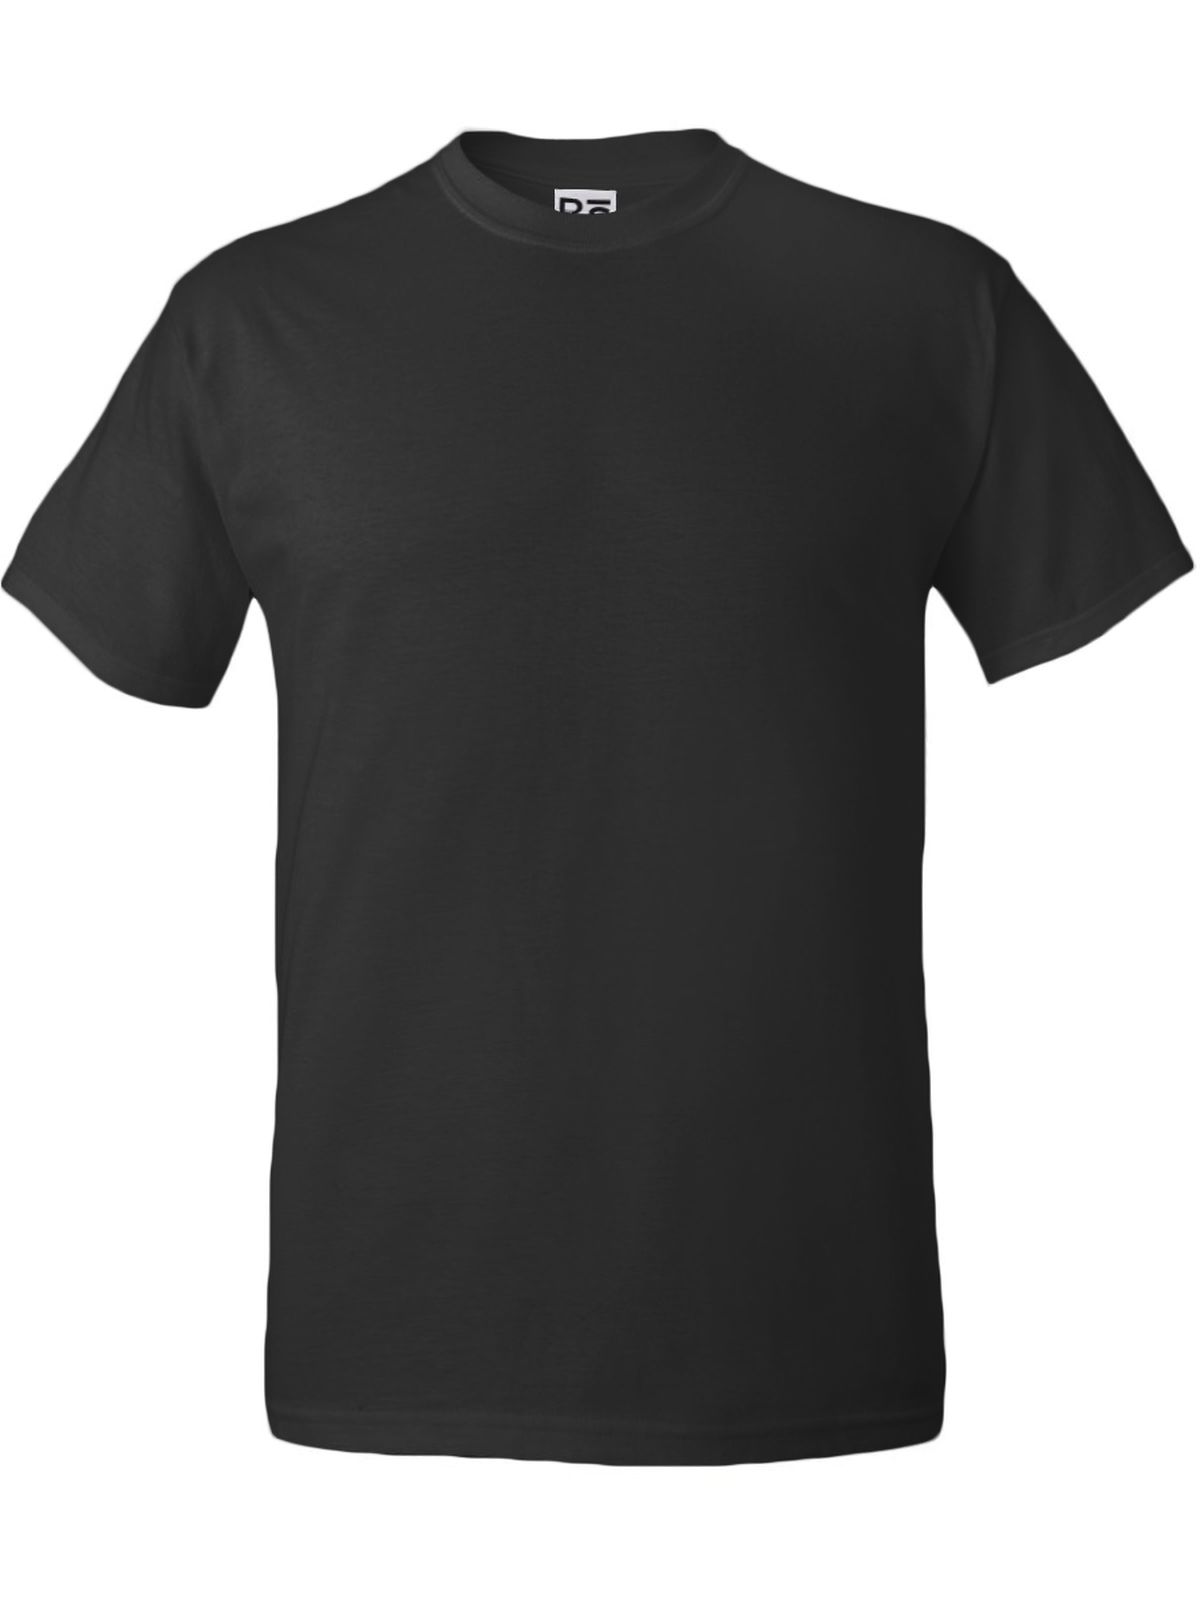 essential-t-shirt-black.webp